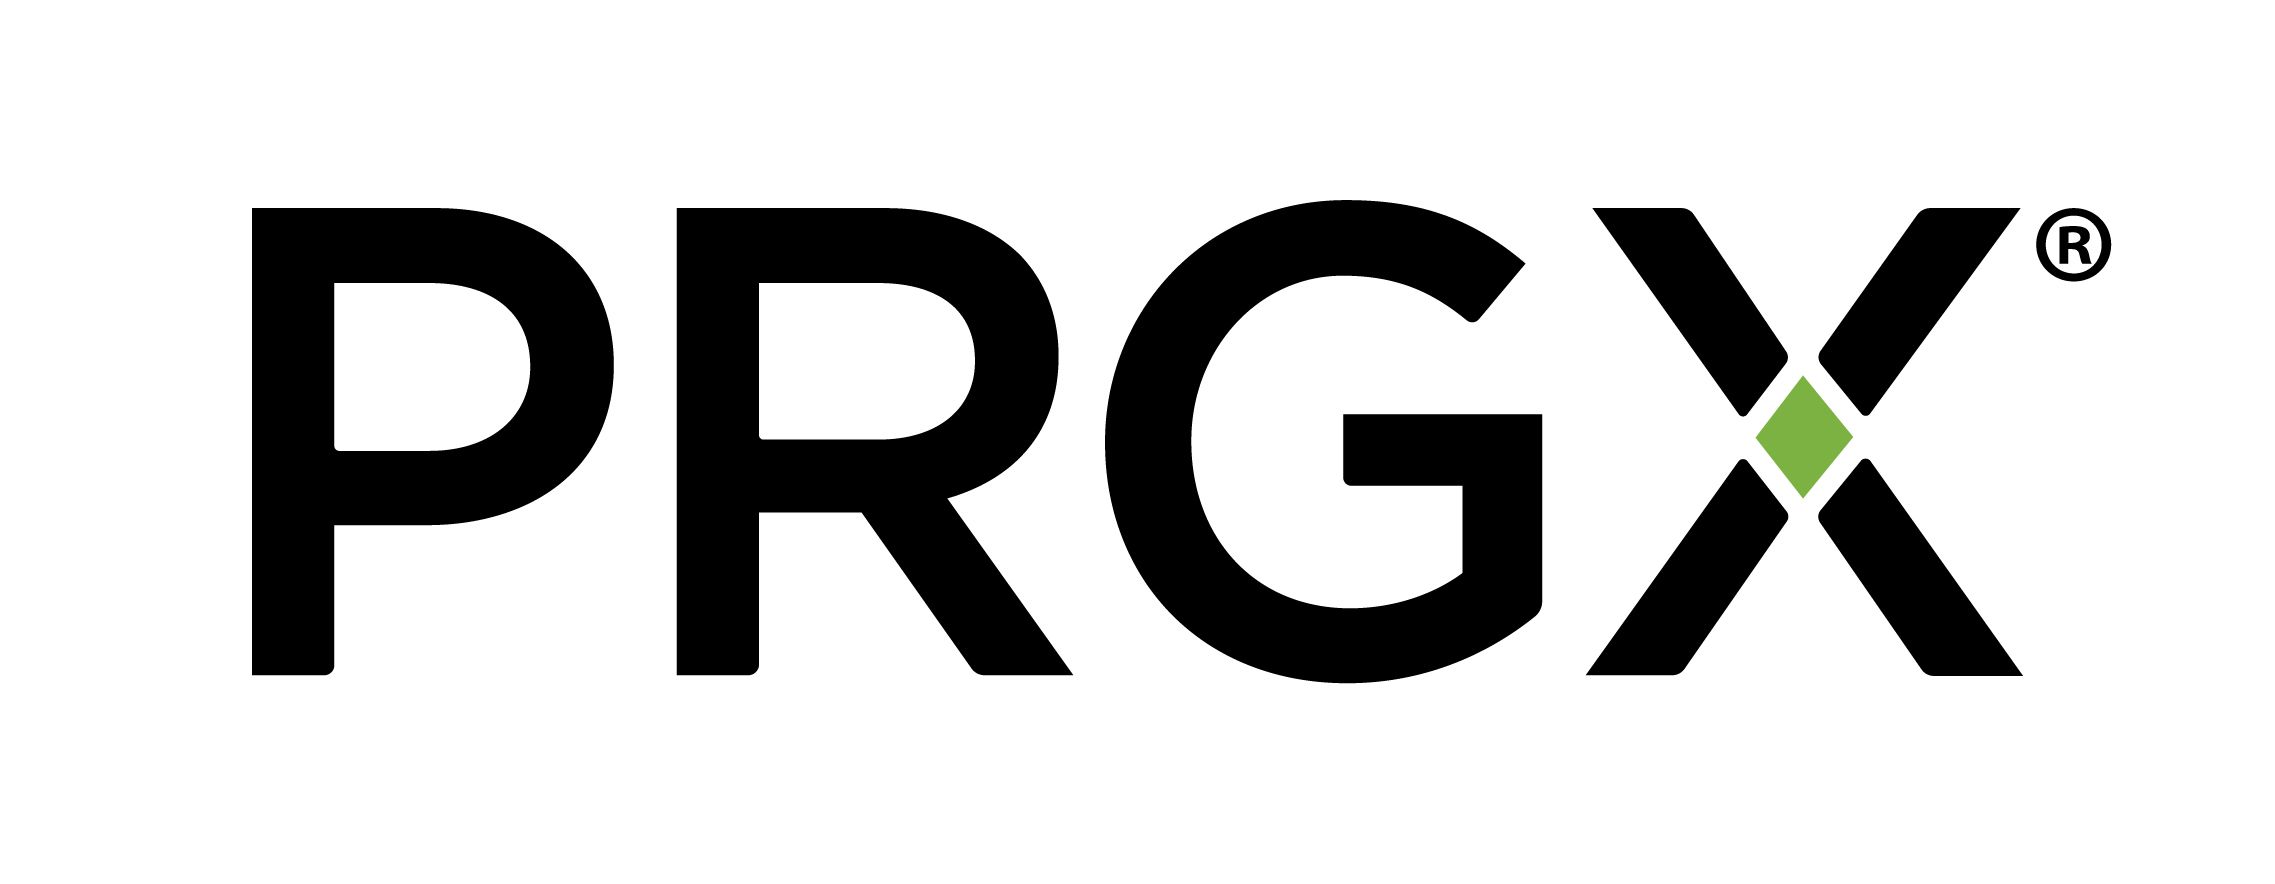 PRGX Logo_TM 2017-Black.jpg